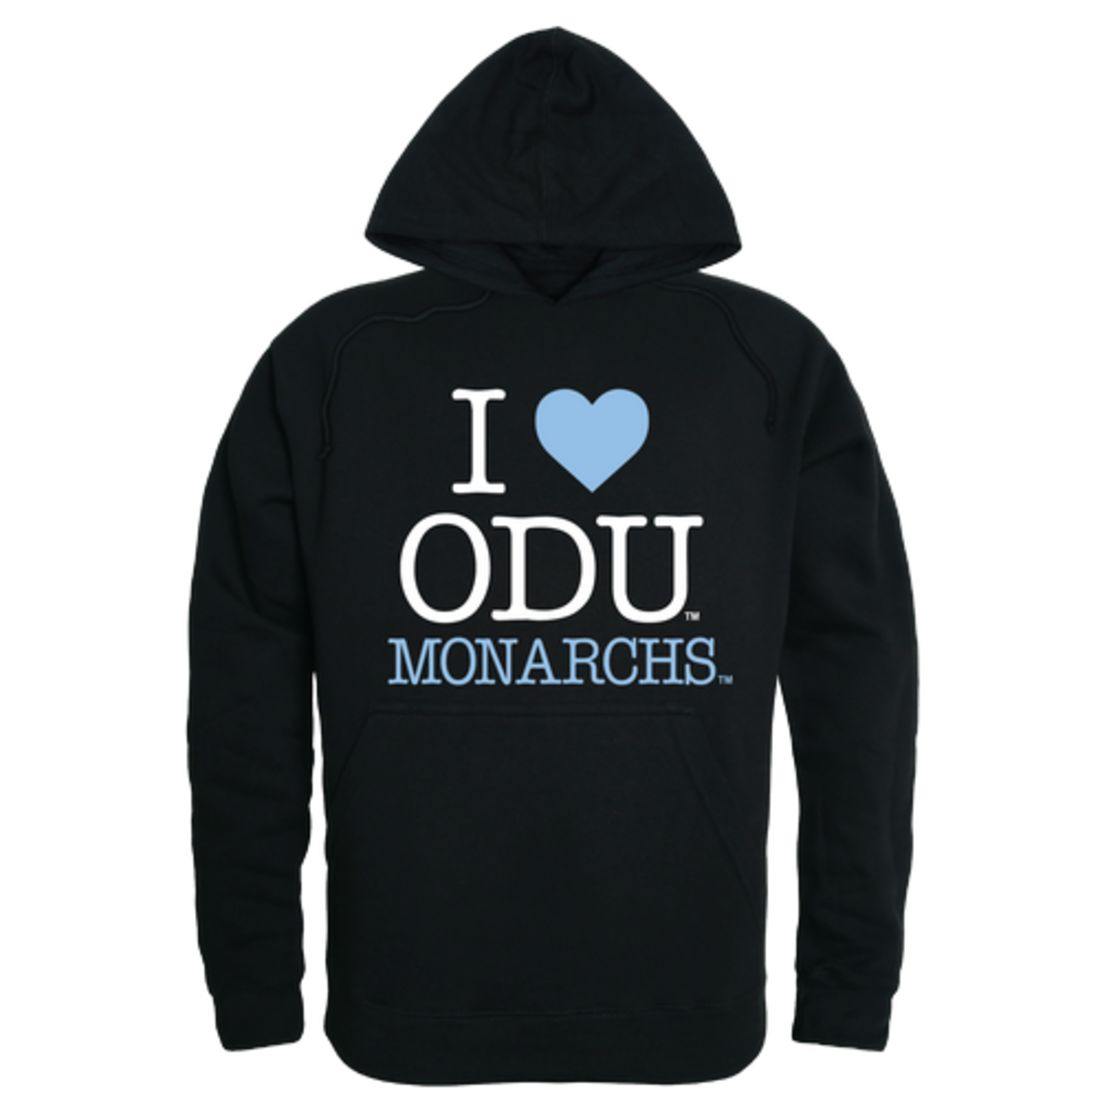 I Love ODU Old Dominion University Monarchs Hoodie Sweatshirt-Campus-Wardrobe